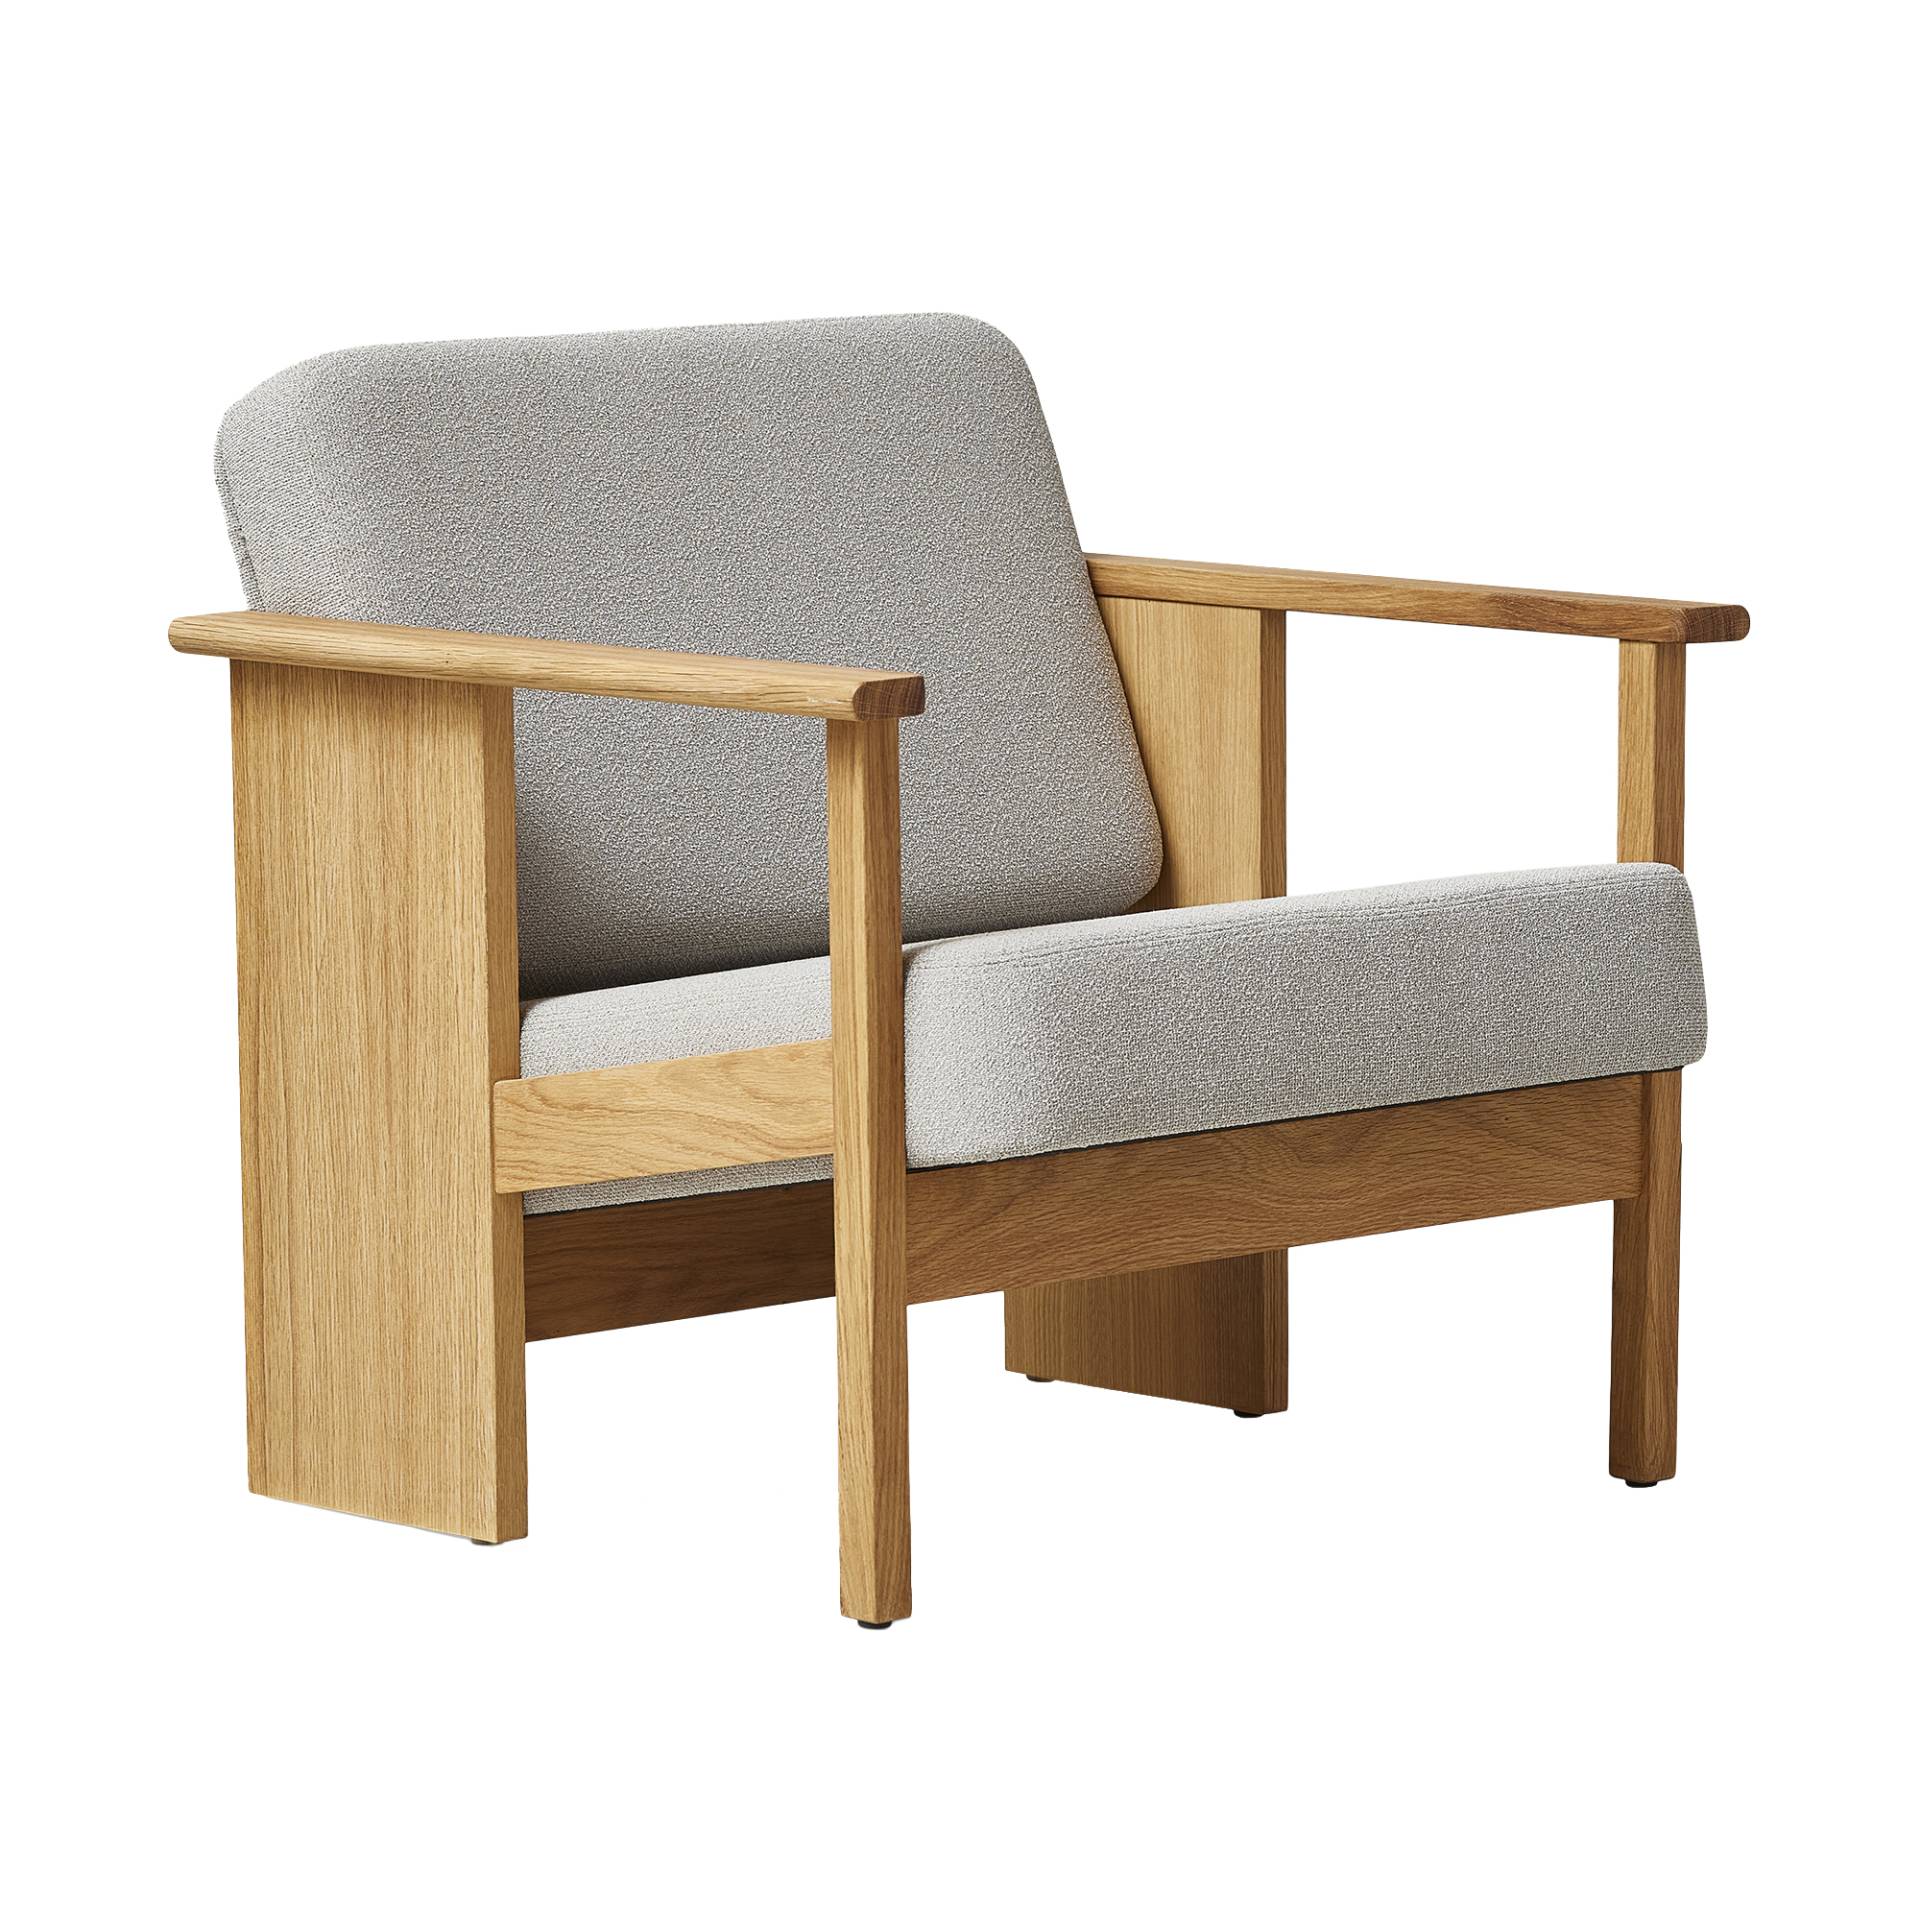 Form & Refine - Block Lounge Sessel Eiche geölt - grau/Gabriel Grain/LxBxH 69,5x73,5x70cm von Form & Refine